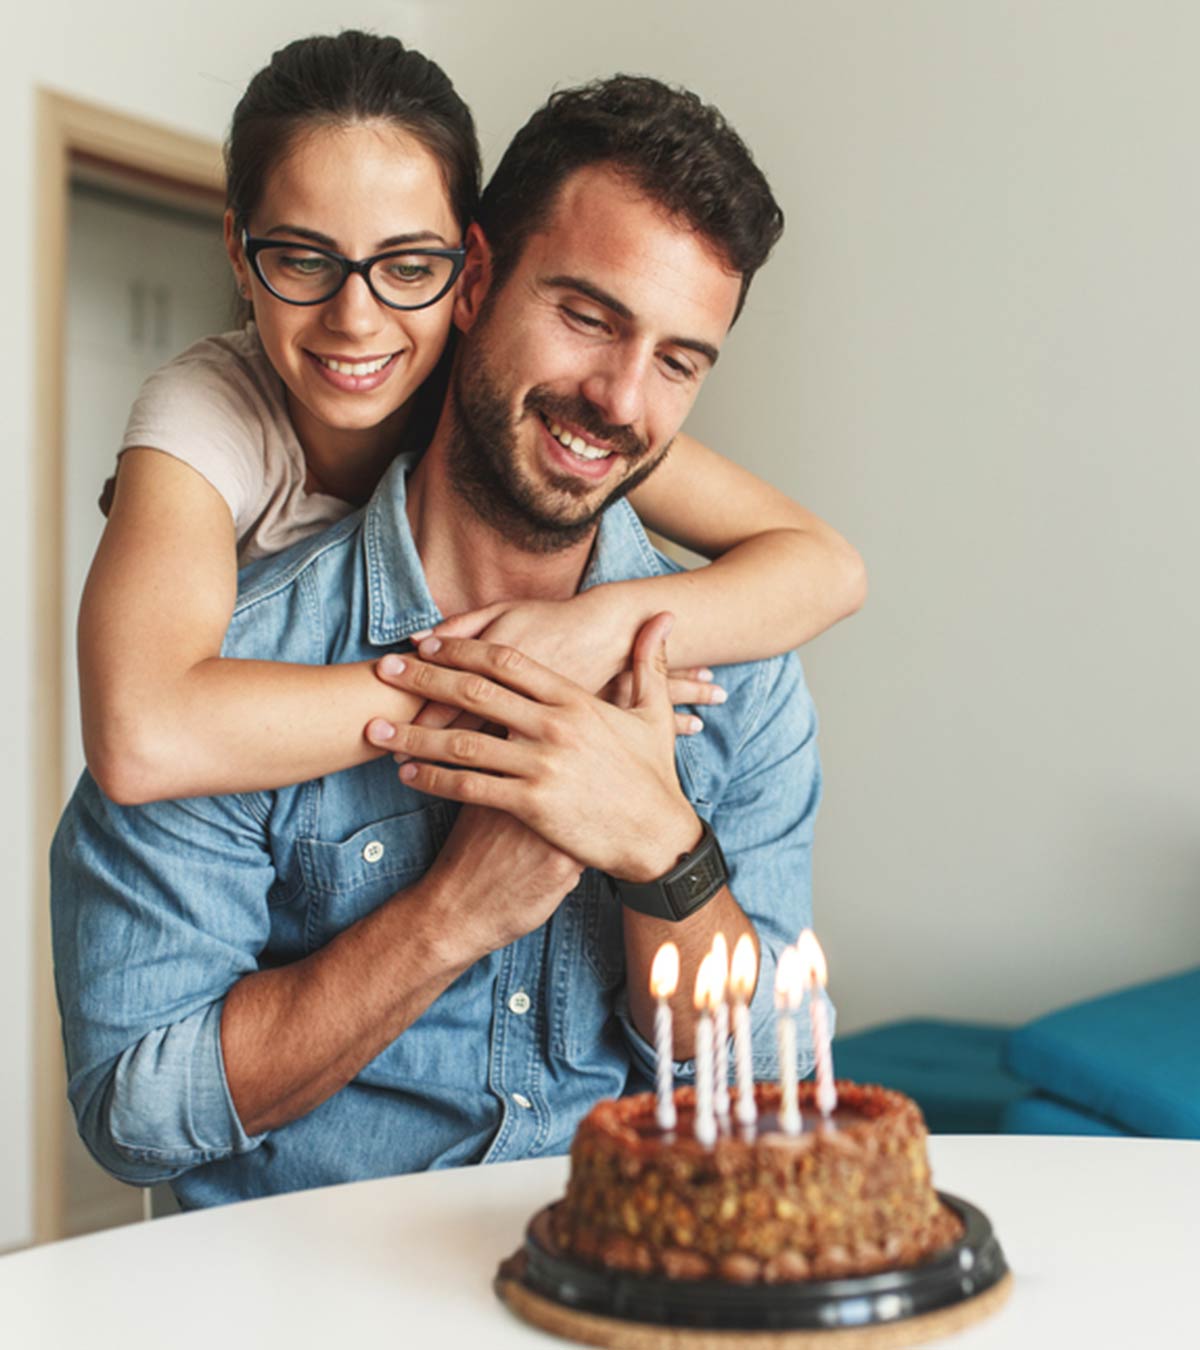 101 Lovely Birthday Wishes For Boyfriend To Make Him Smile